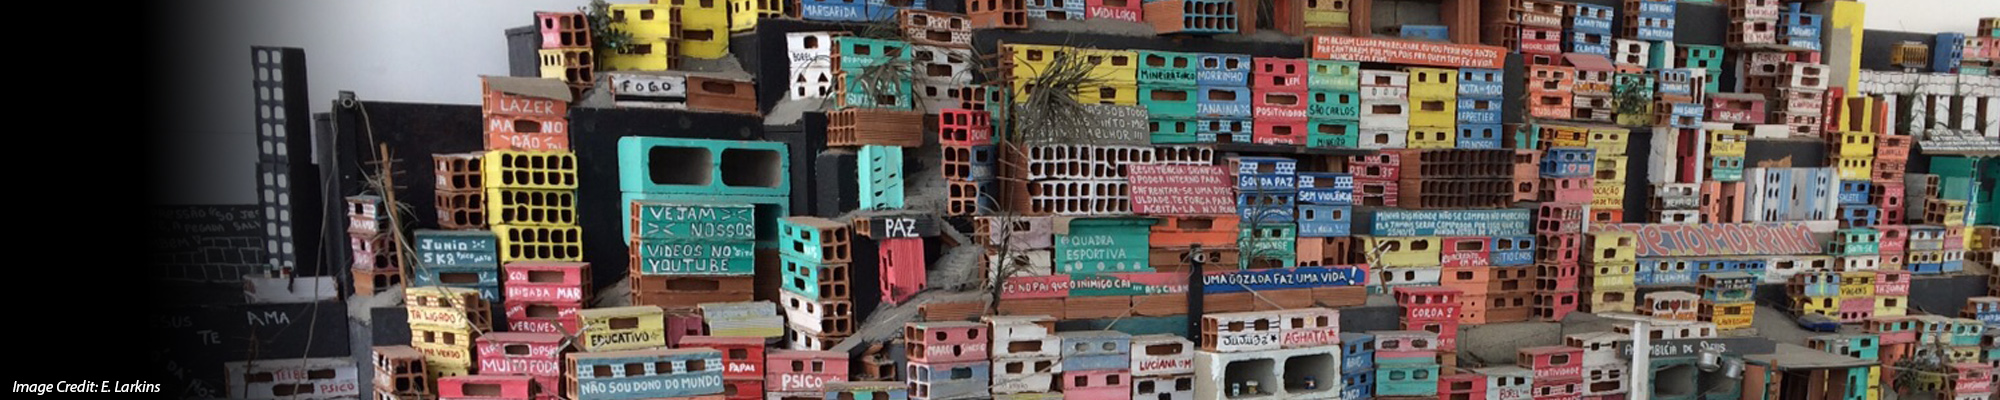 model of favela, Photo Credit: E. Robb Larkins